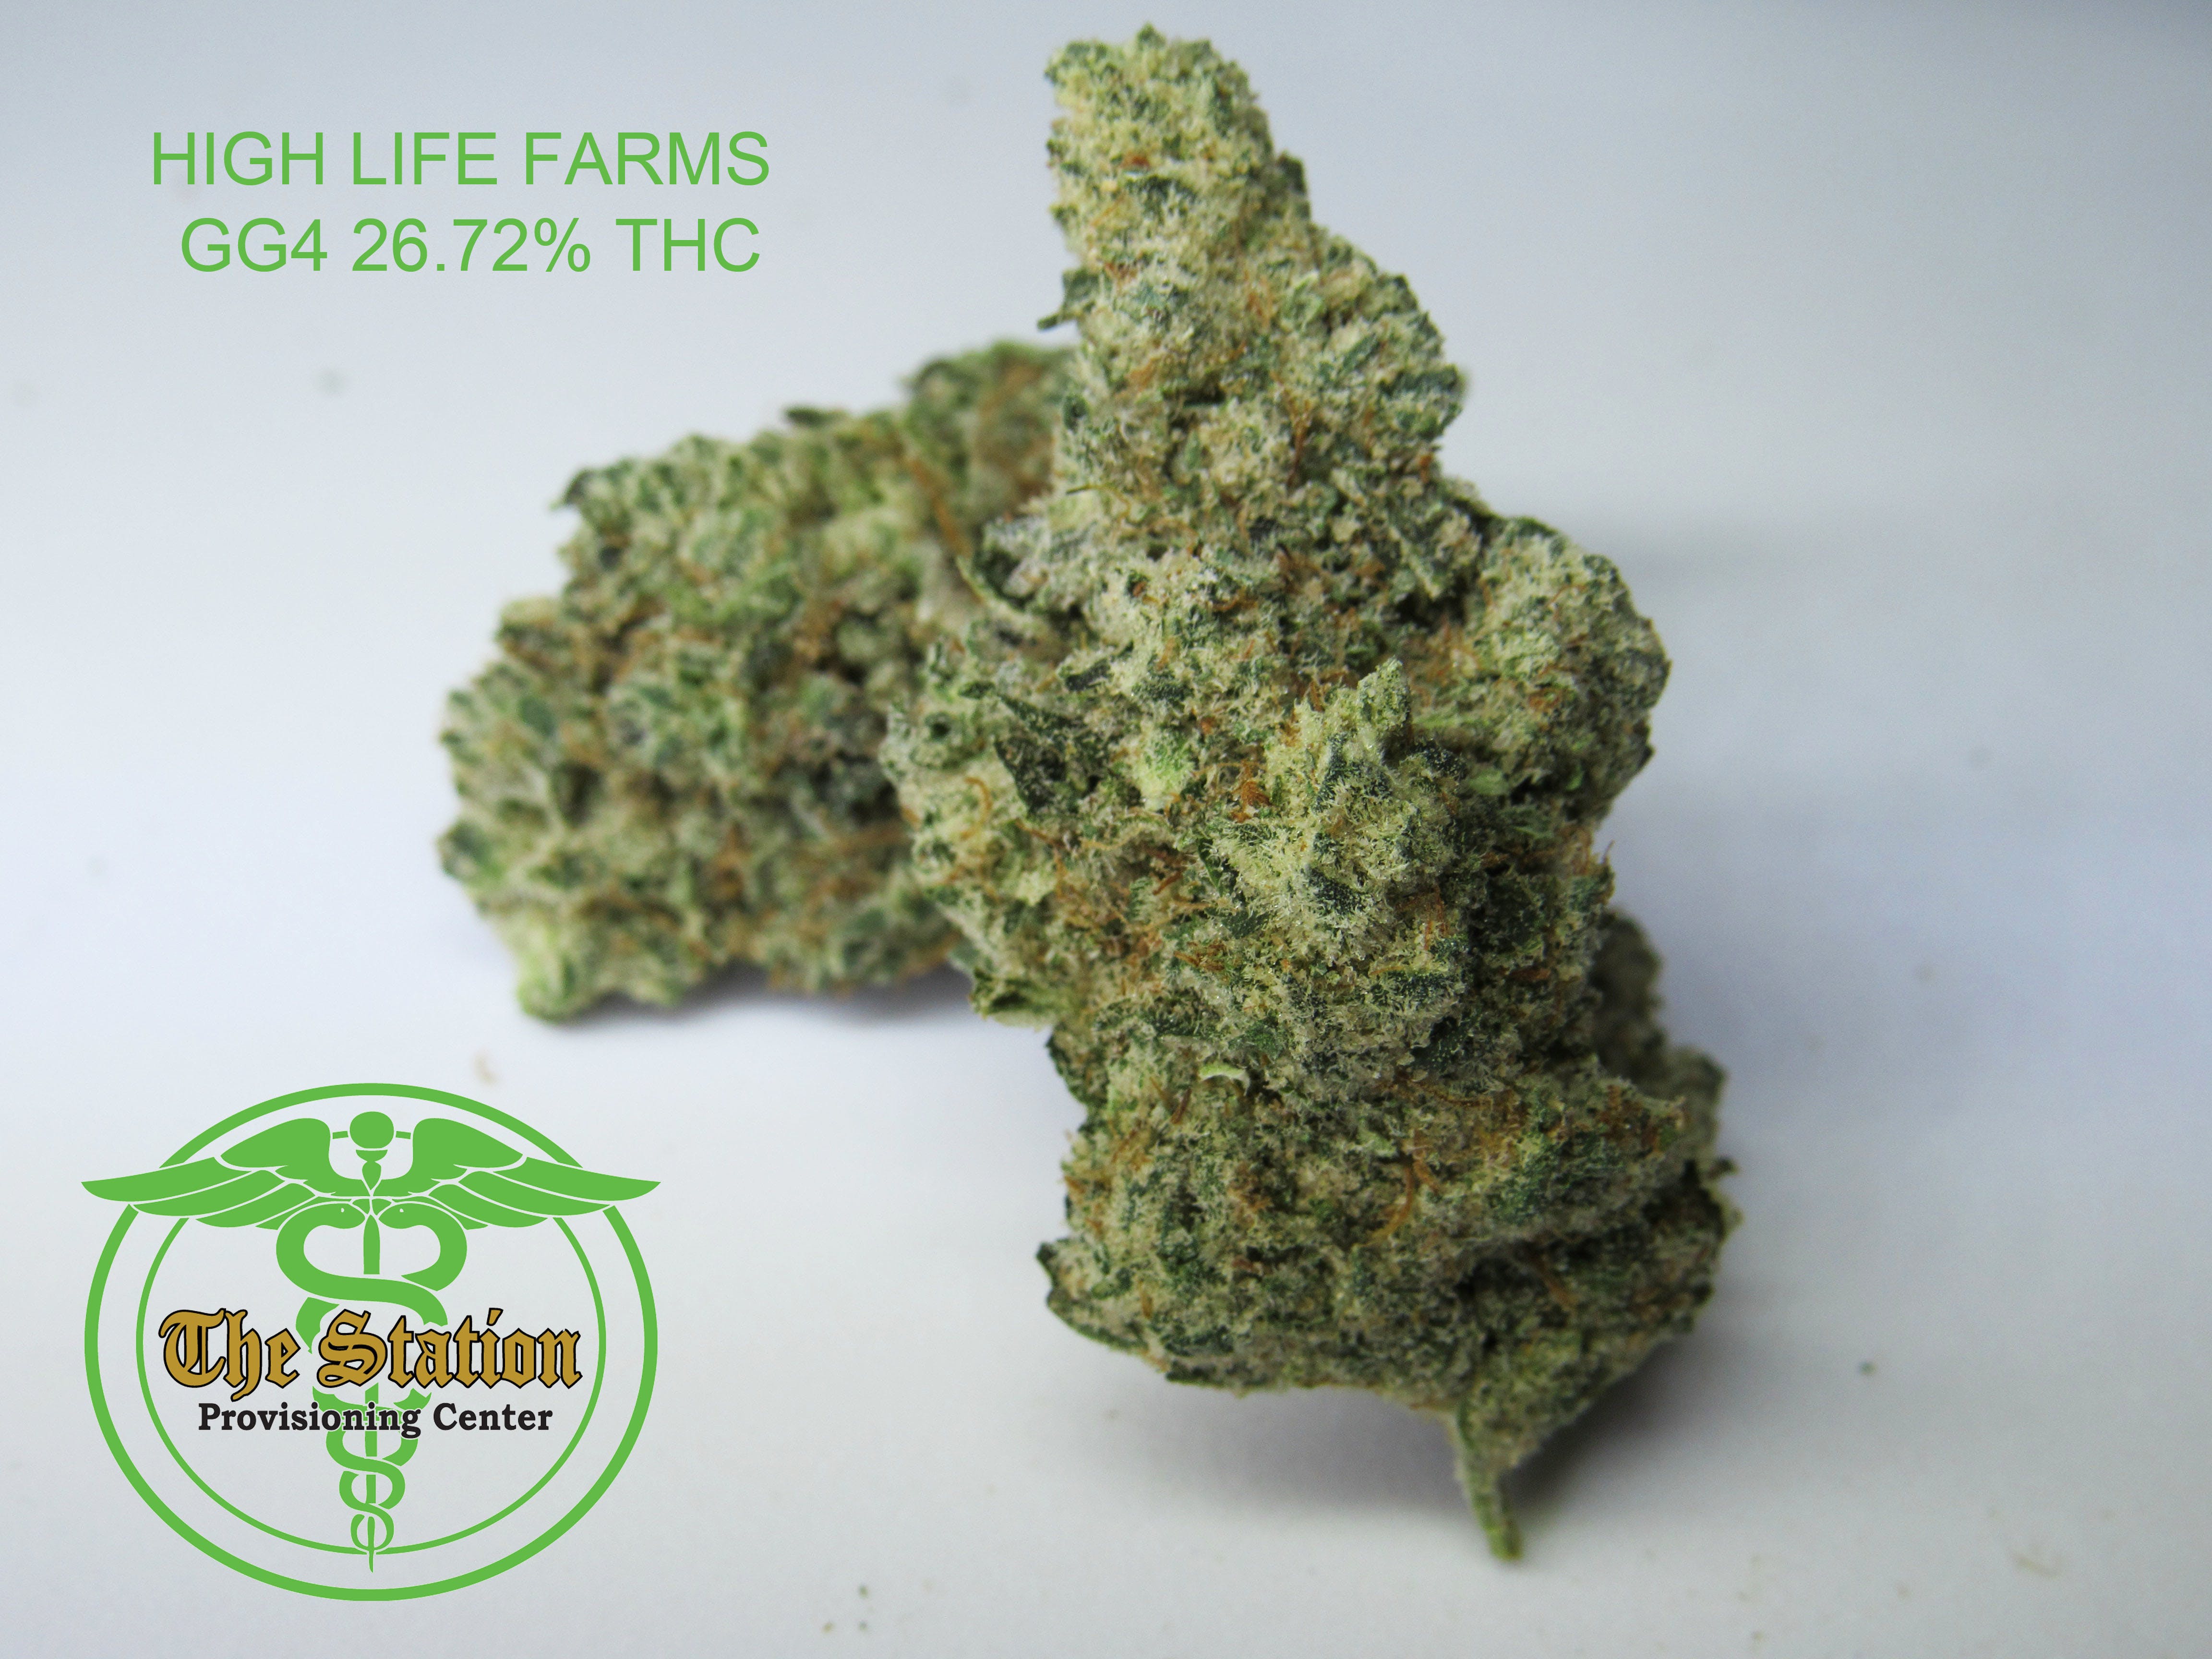 marijuana-dispensaries-the-station-in-vassar-high-life-farms-gg4